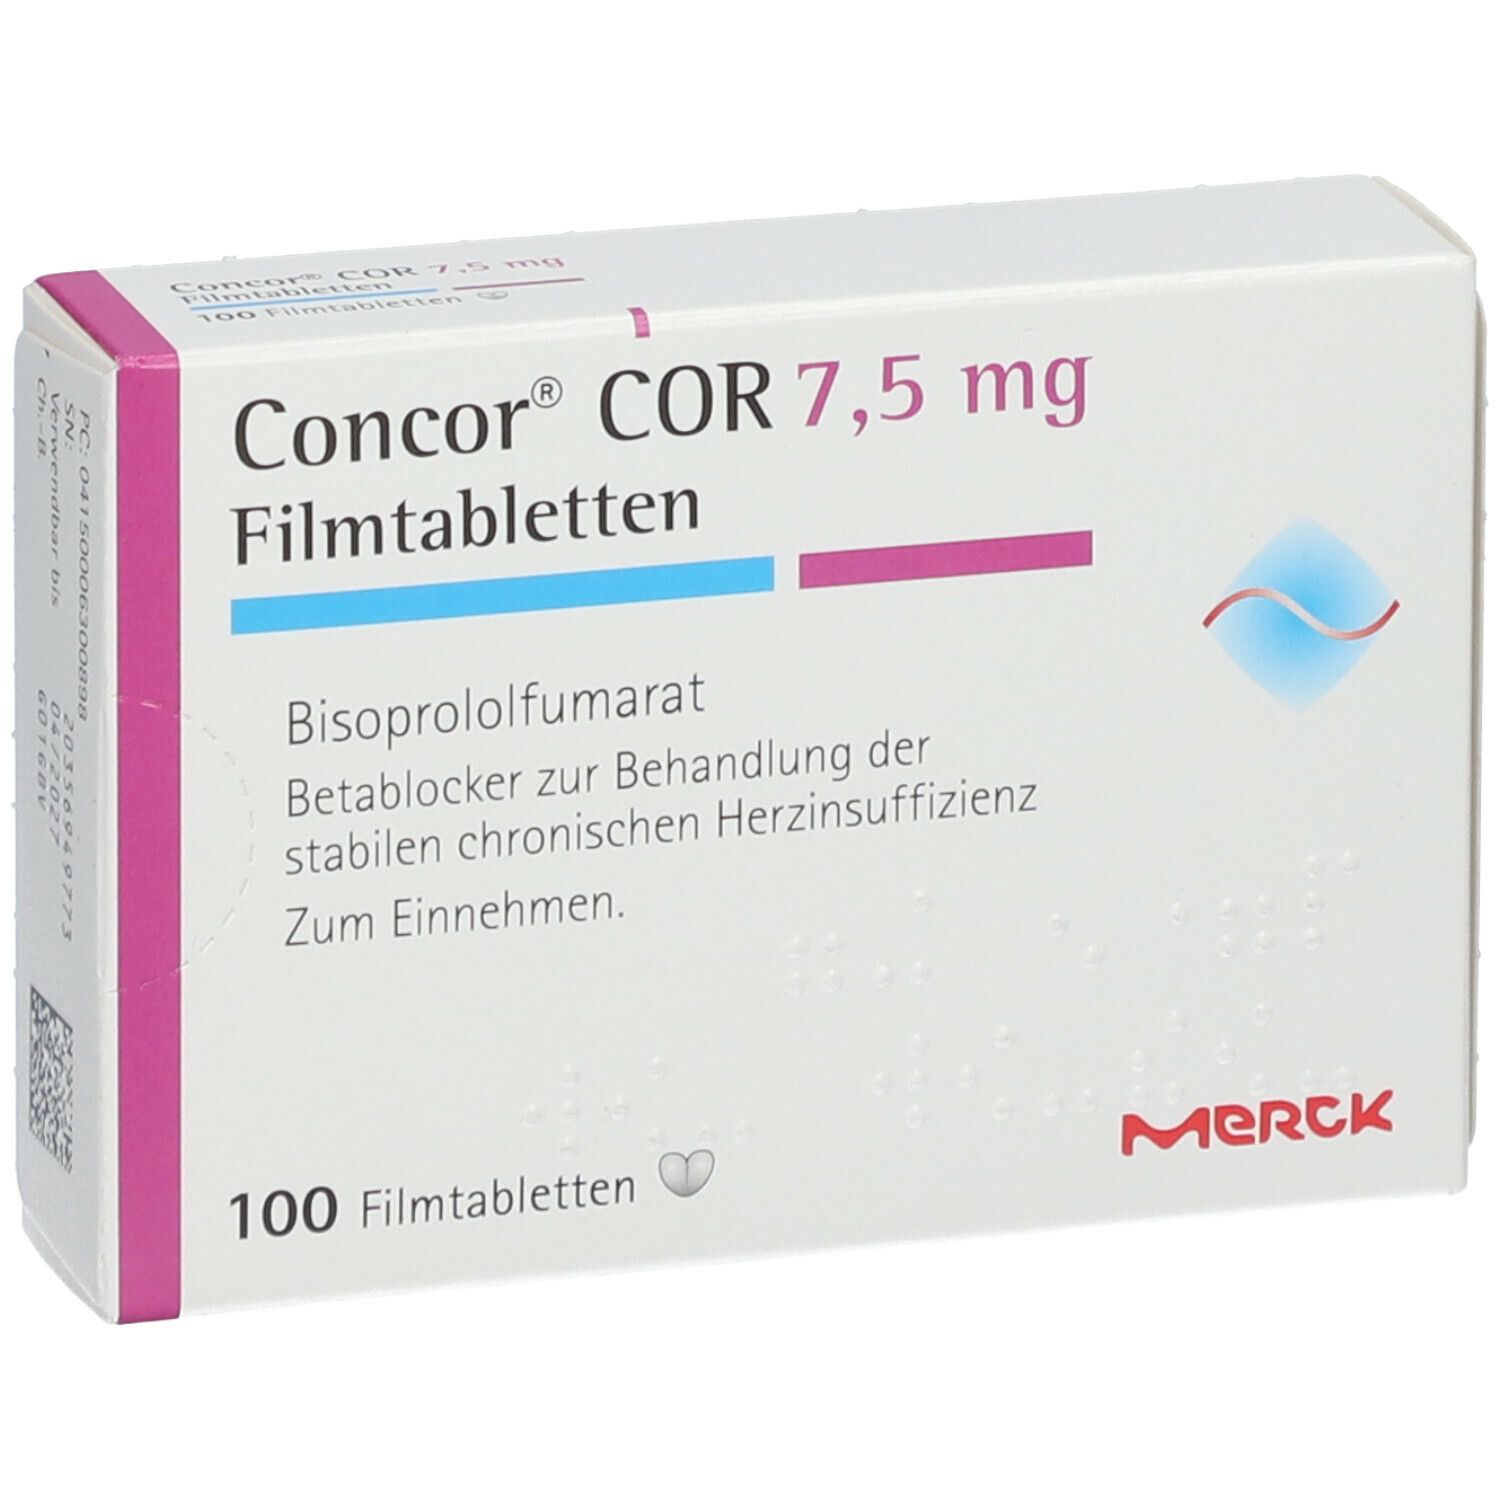 Concor® COR 7,5 mg